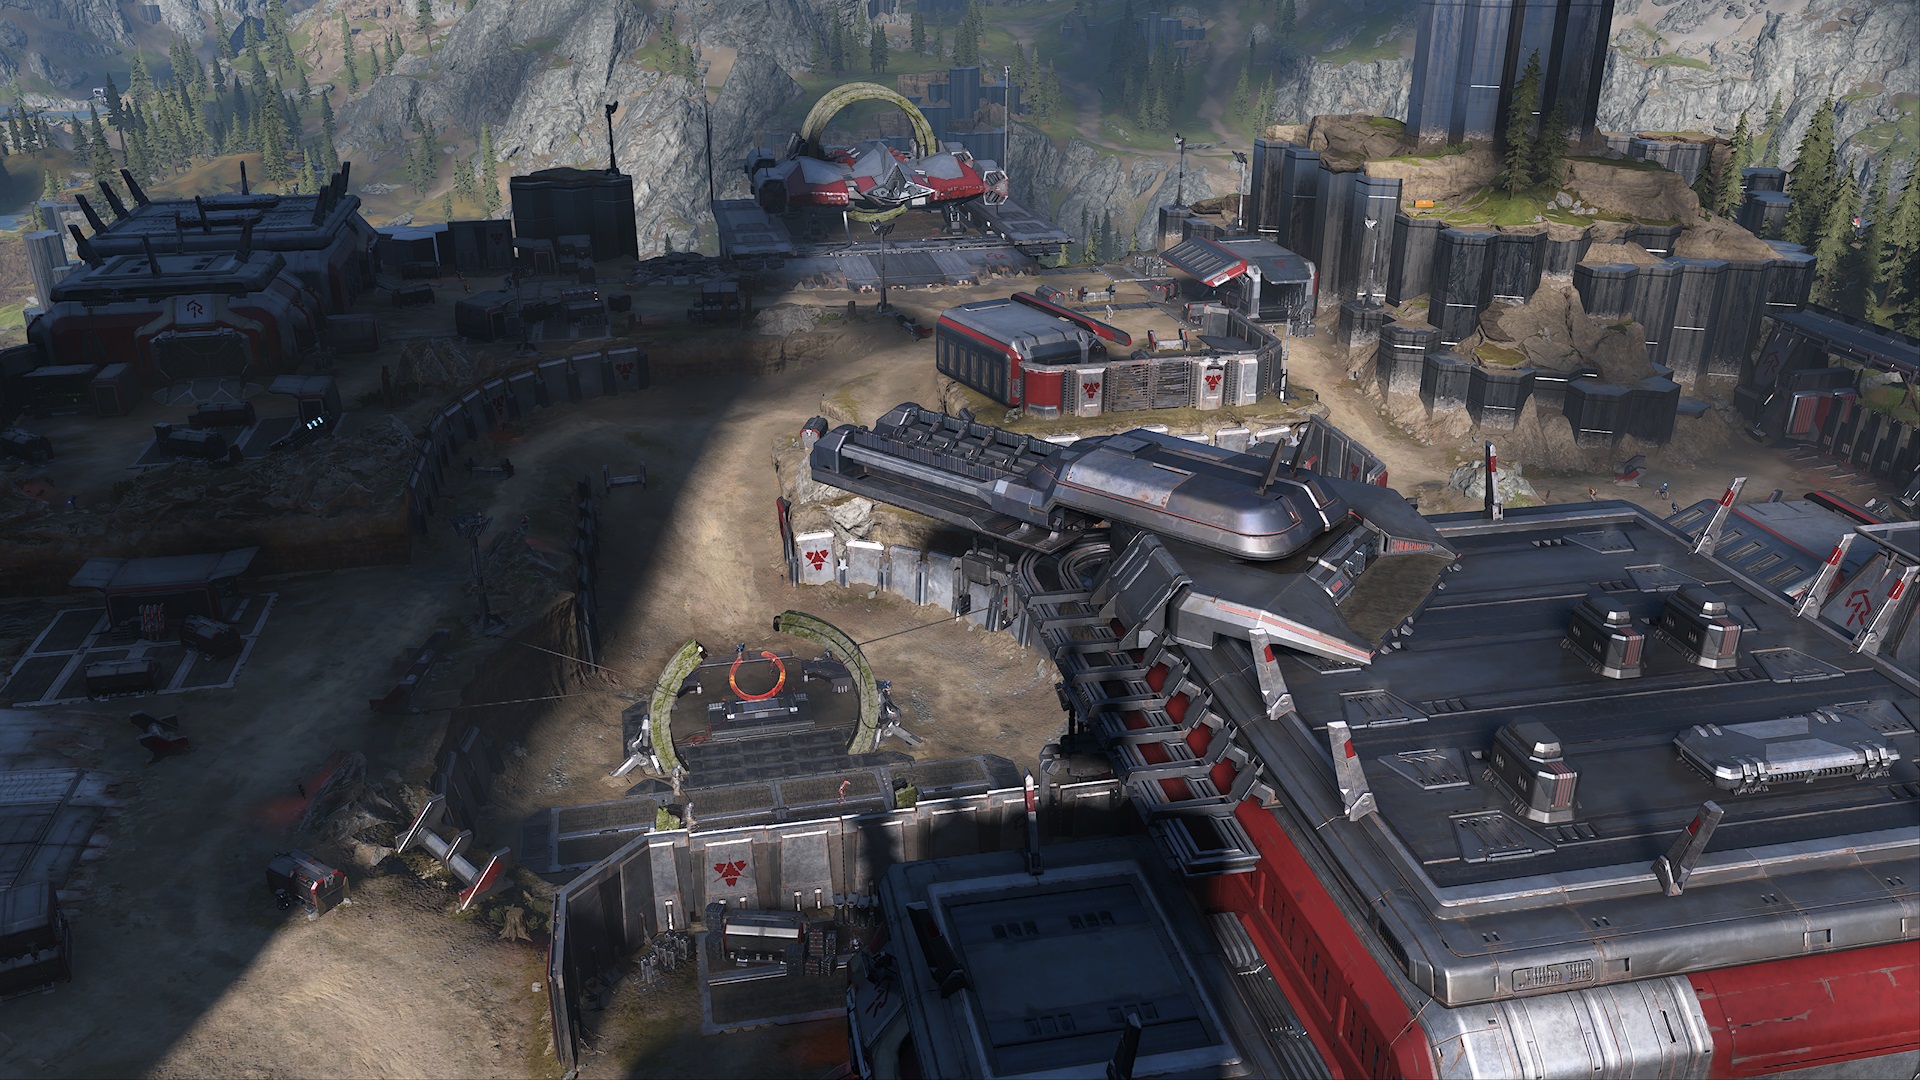 Screenshot of Annex Ridge in Halo Infinite.